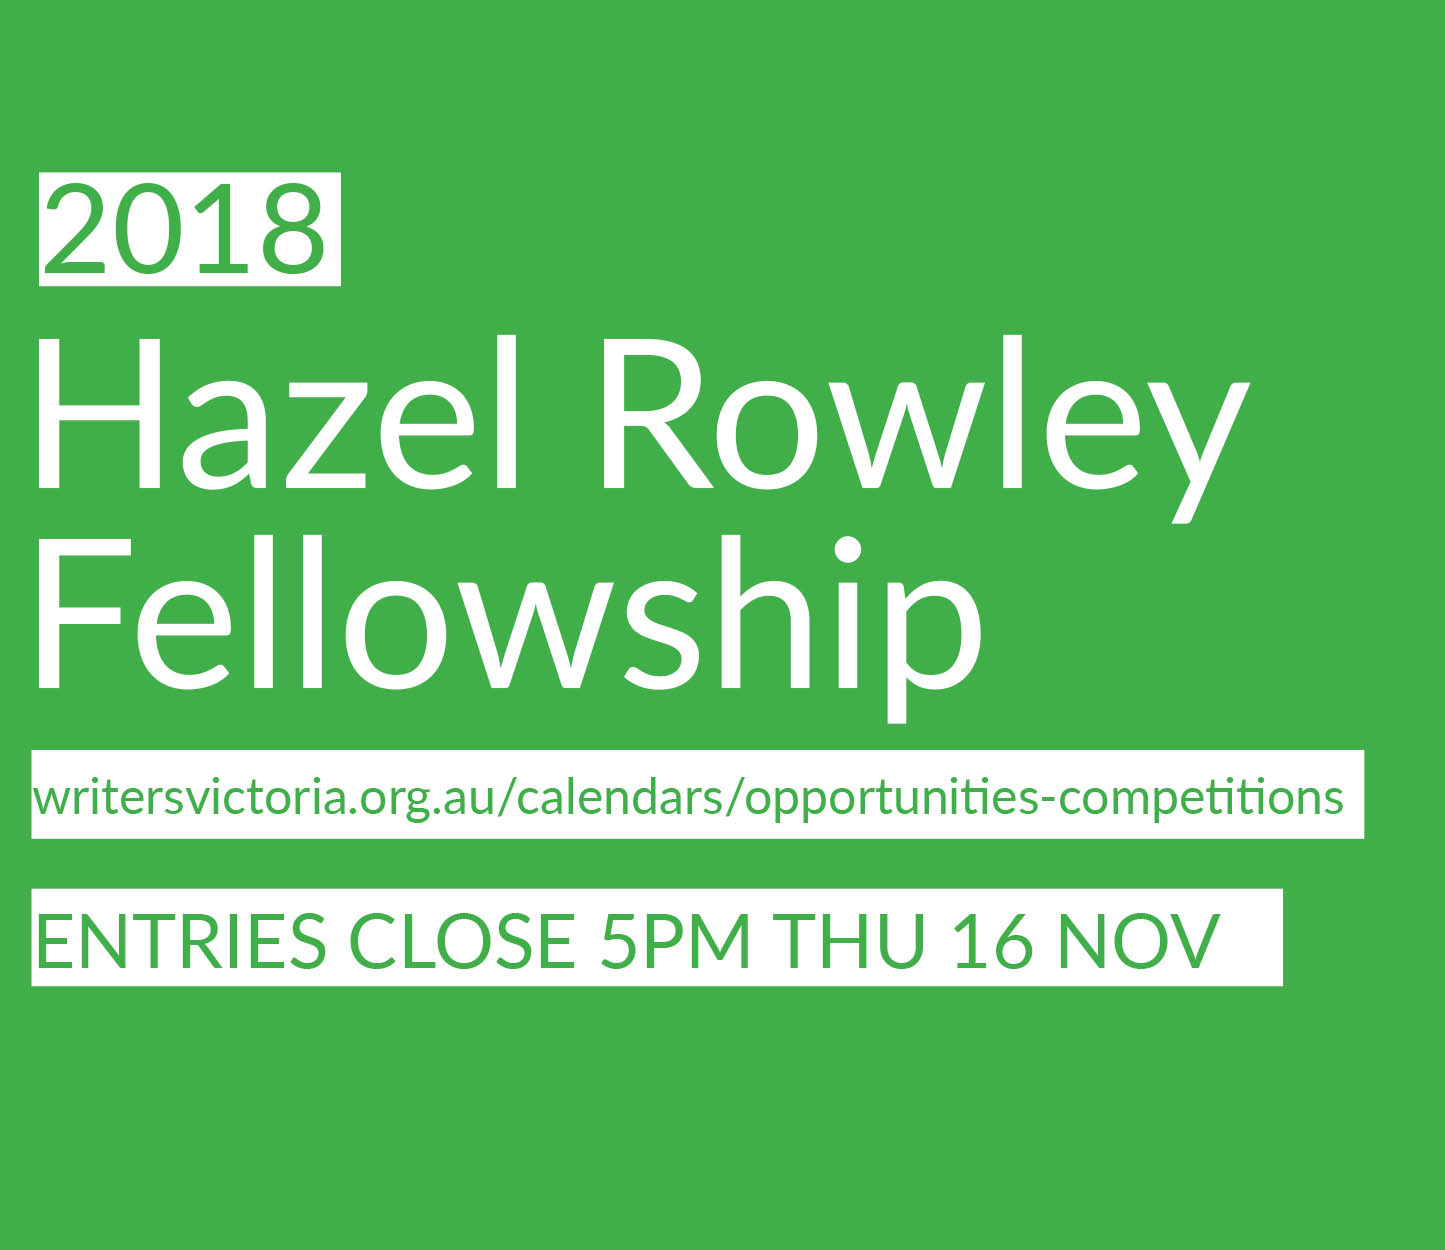 2018 Hazel Rowley Fellowship opens